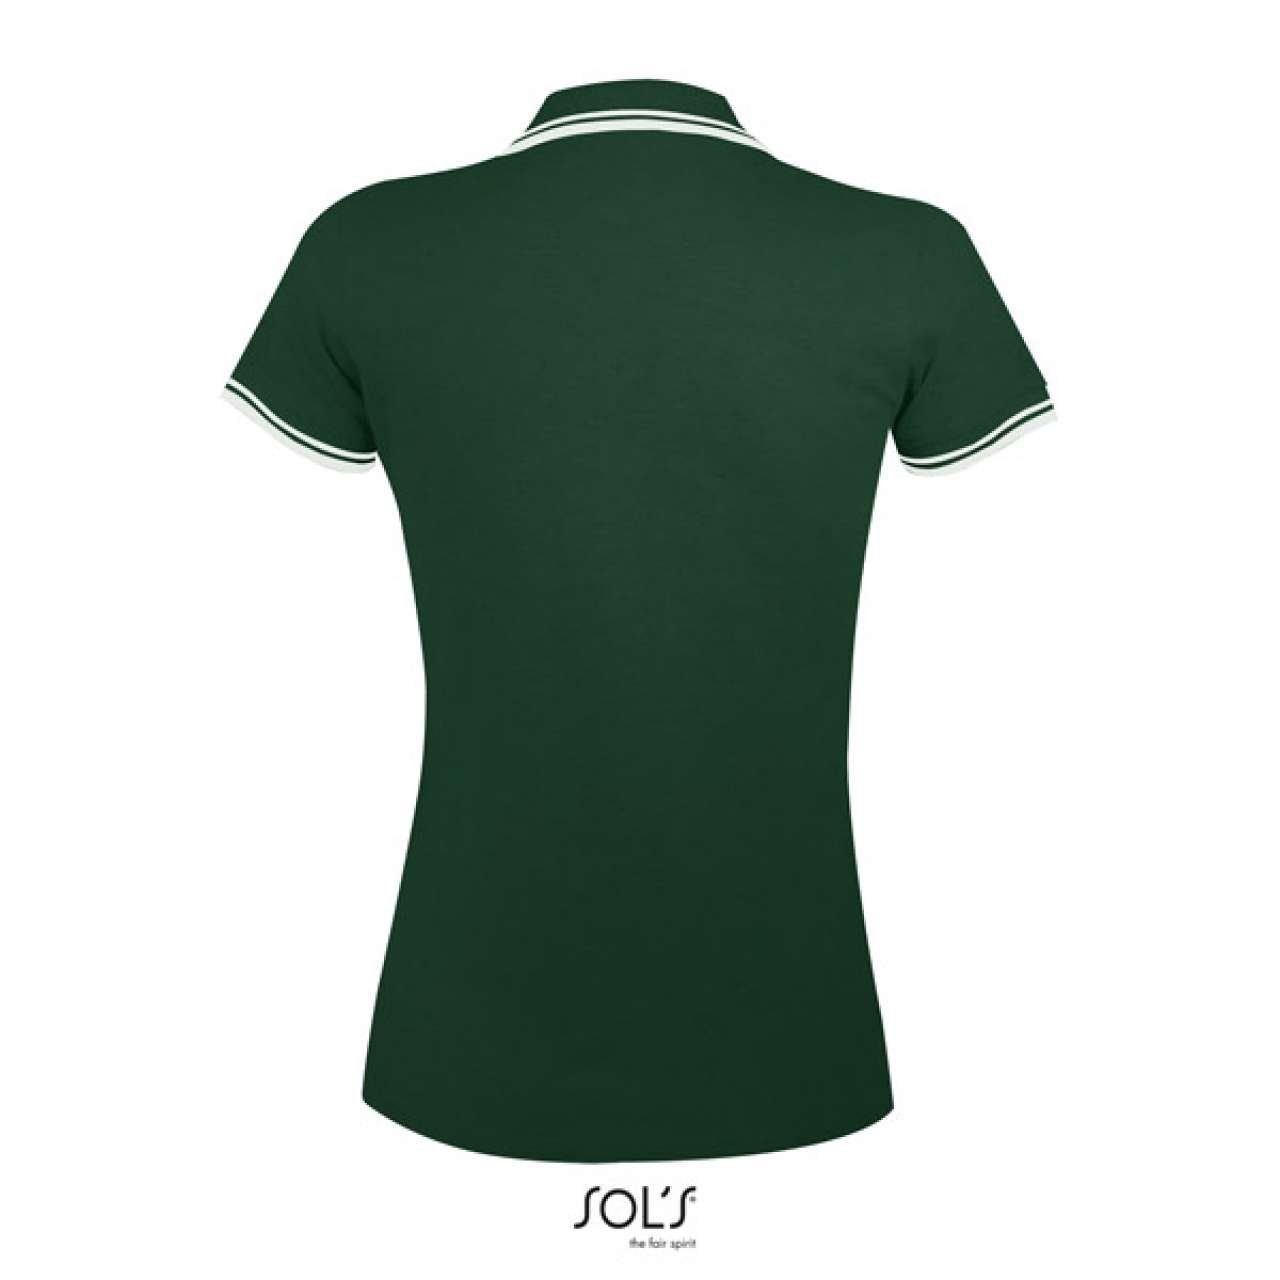 Damen SOLS Lady-Fit Forest Shirt Green/White Polohemd Piqué T-Shirt kurzarm Poloshirt Polo Poloshirt Oberteil, SOL'S